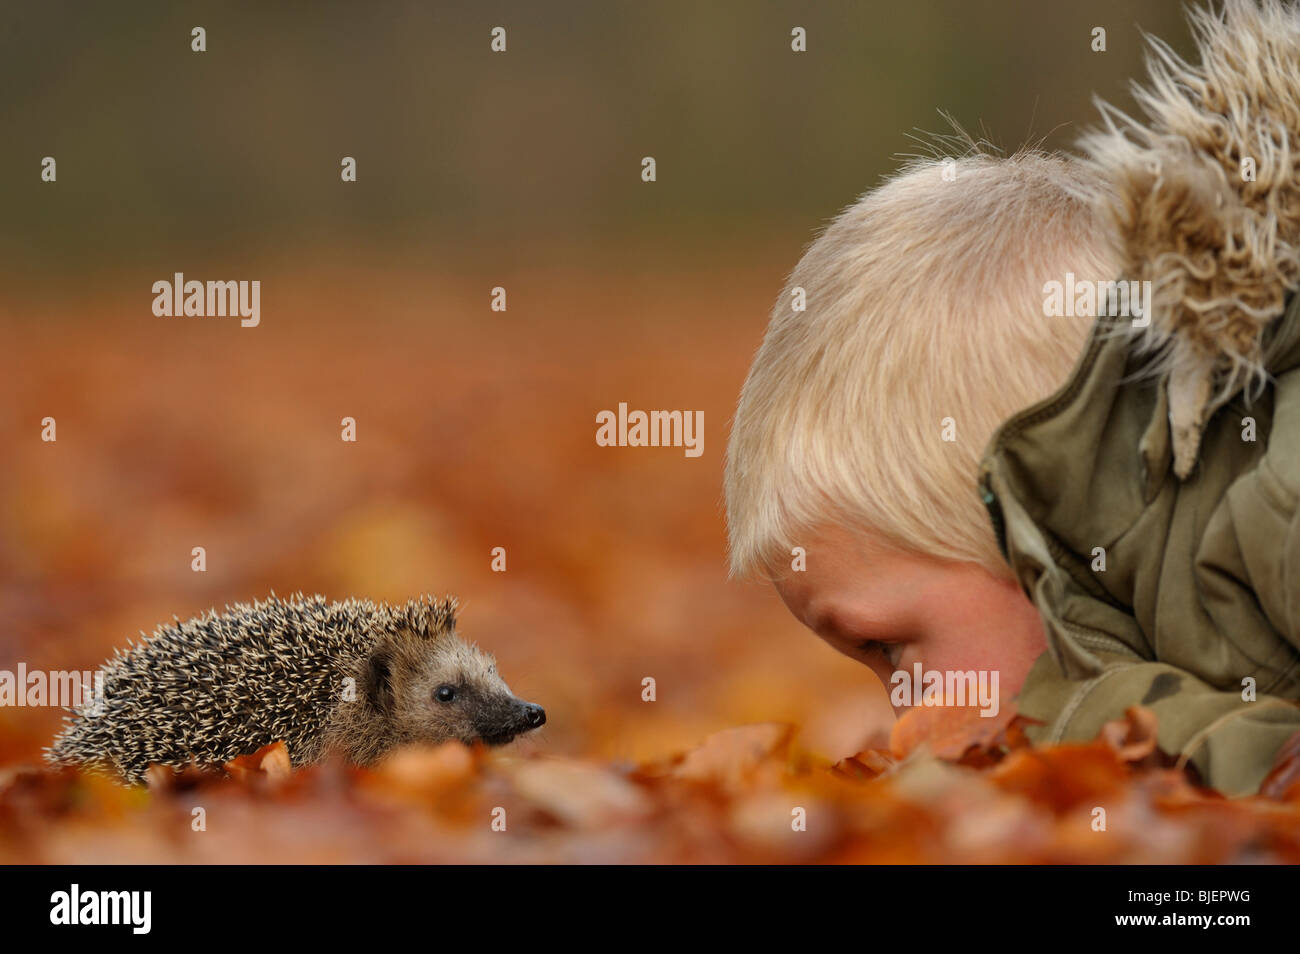 Hedgehog (Erinaceus europaeus). Boy eye-to eye with hedgehog in autumn forest. Stock Photo